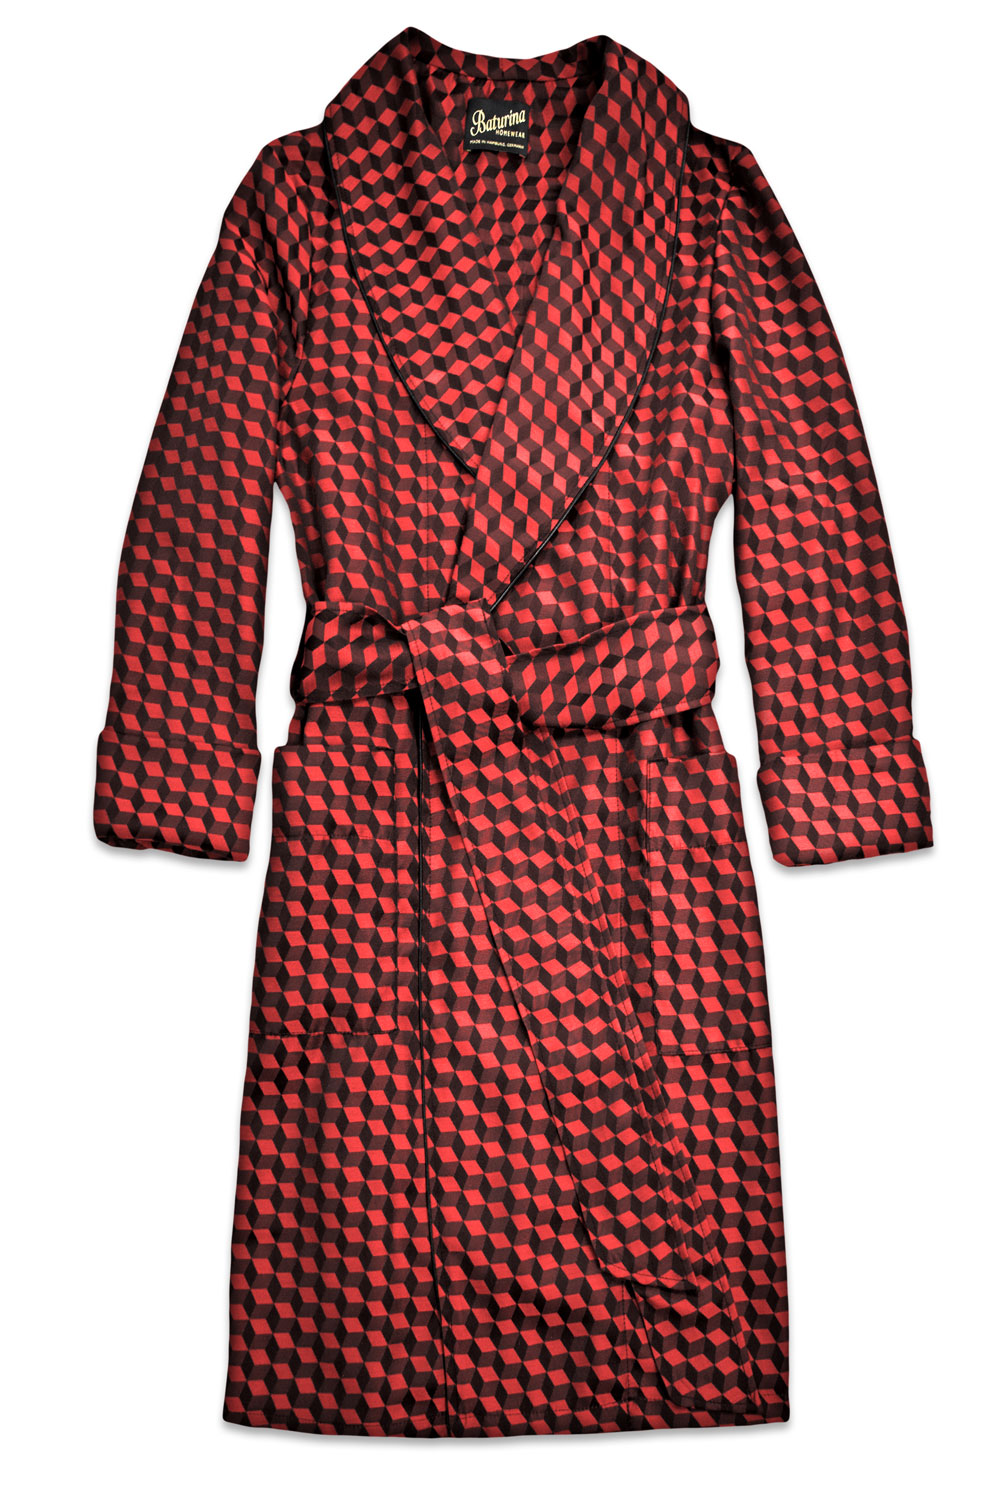 Women's Robes & Wraps | Nordstrom